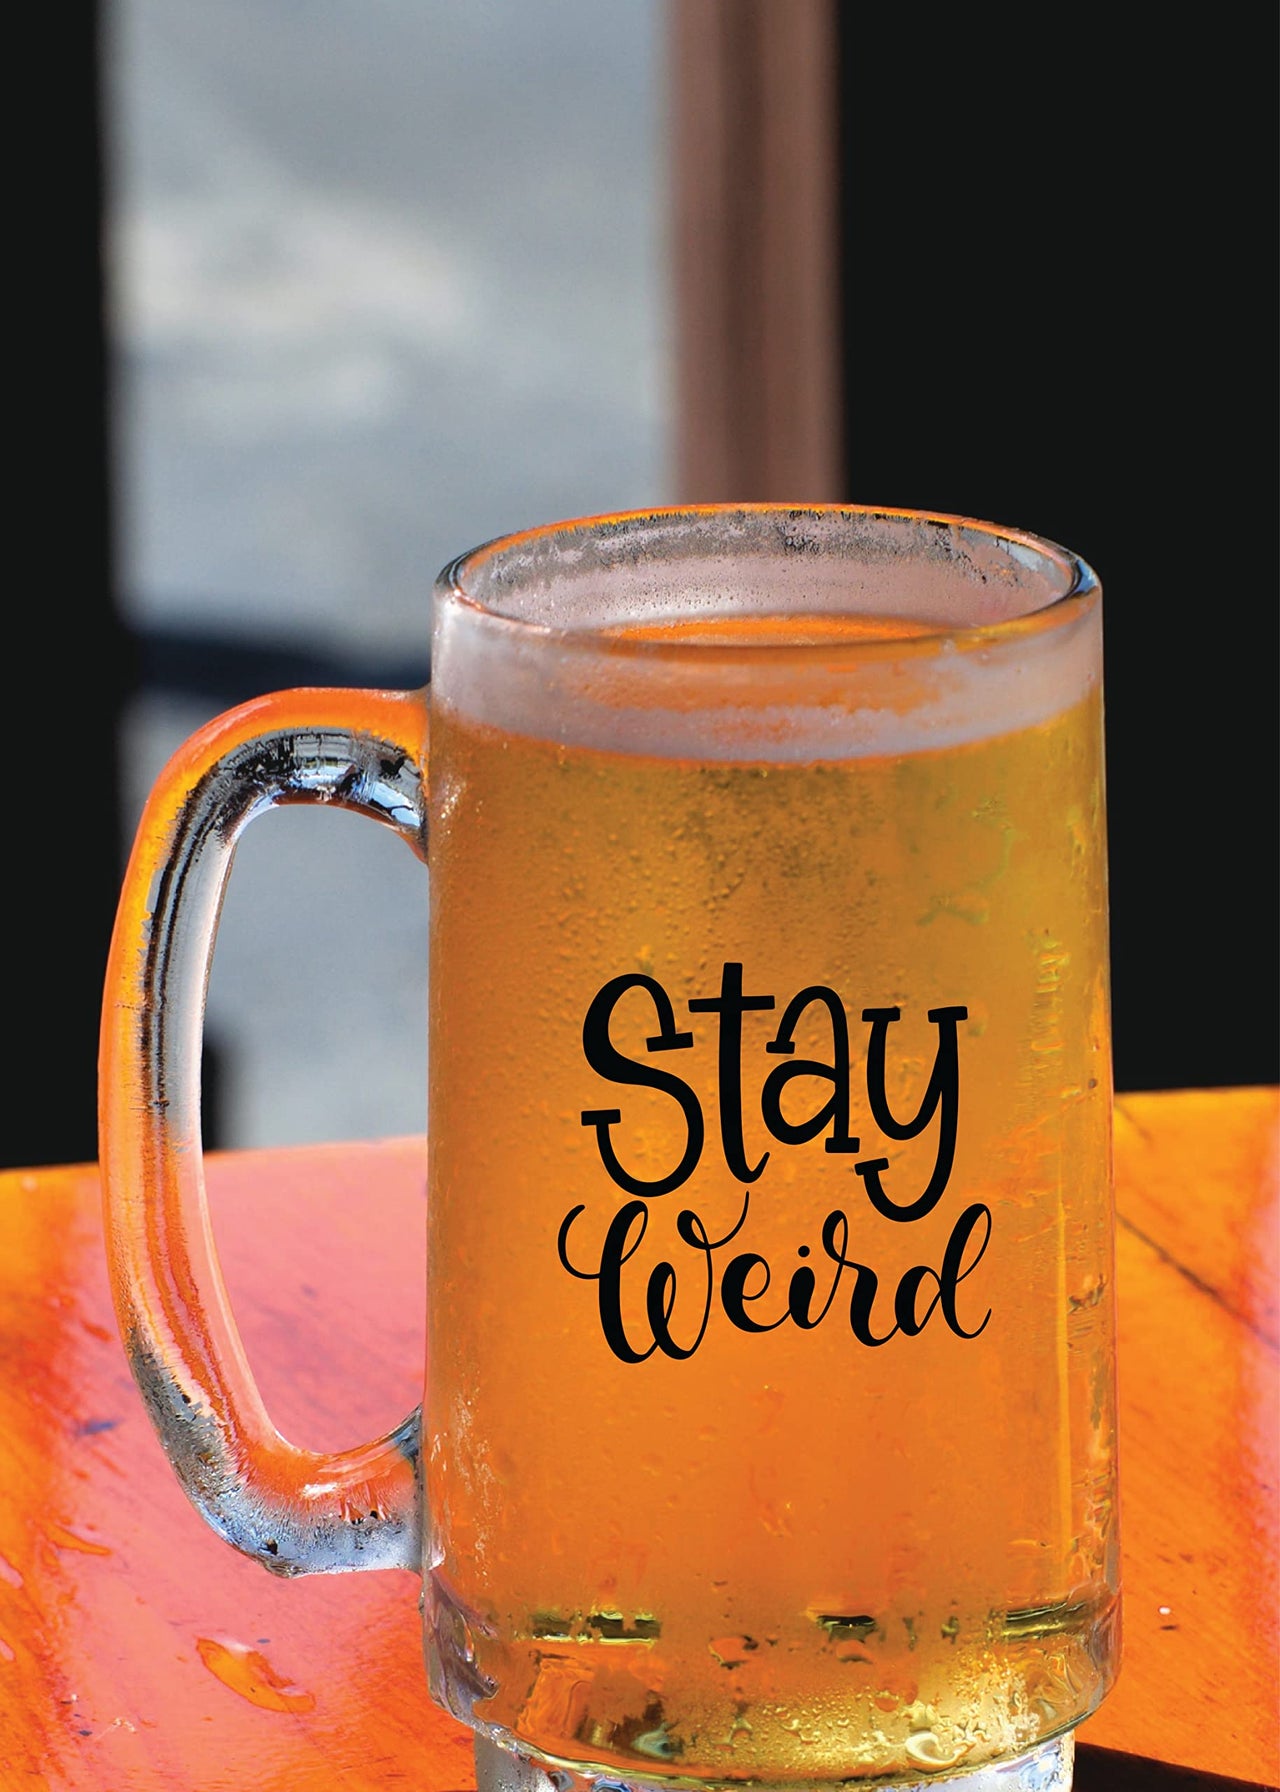 Stay Weird - Beer Mug - 1 Piece, Clear, 500 ml - Transparent Glass Beer Mug - Printed Beer Mug with Handle